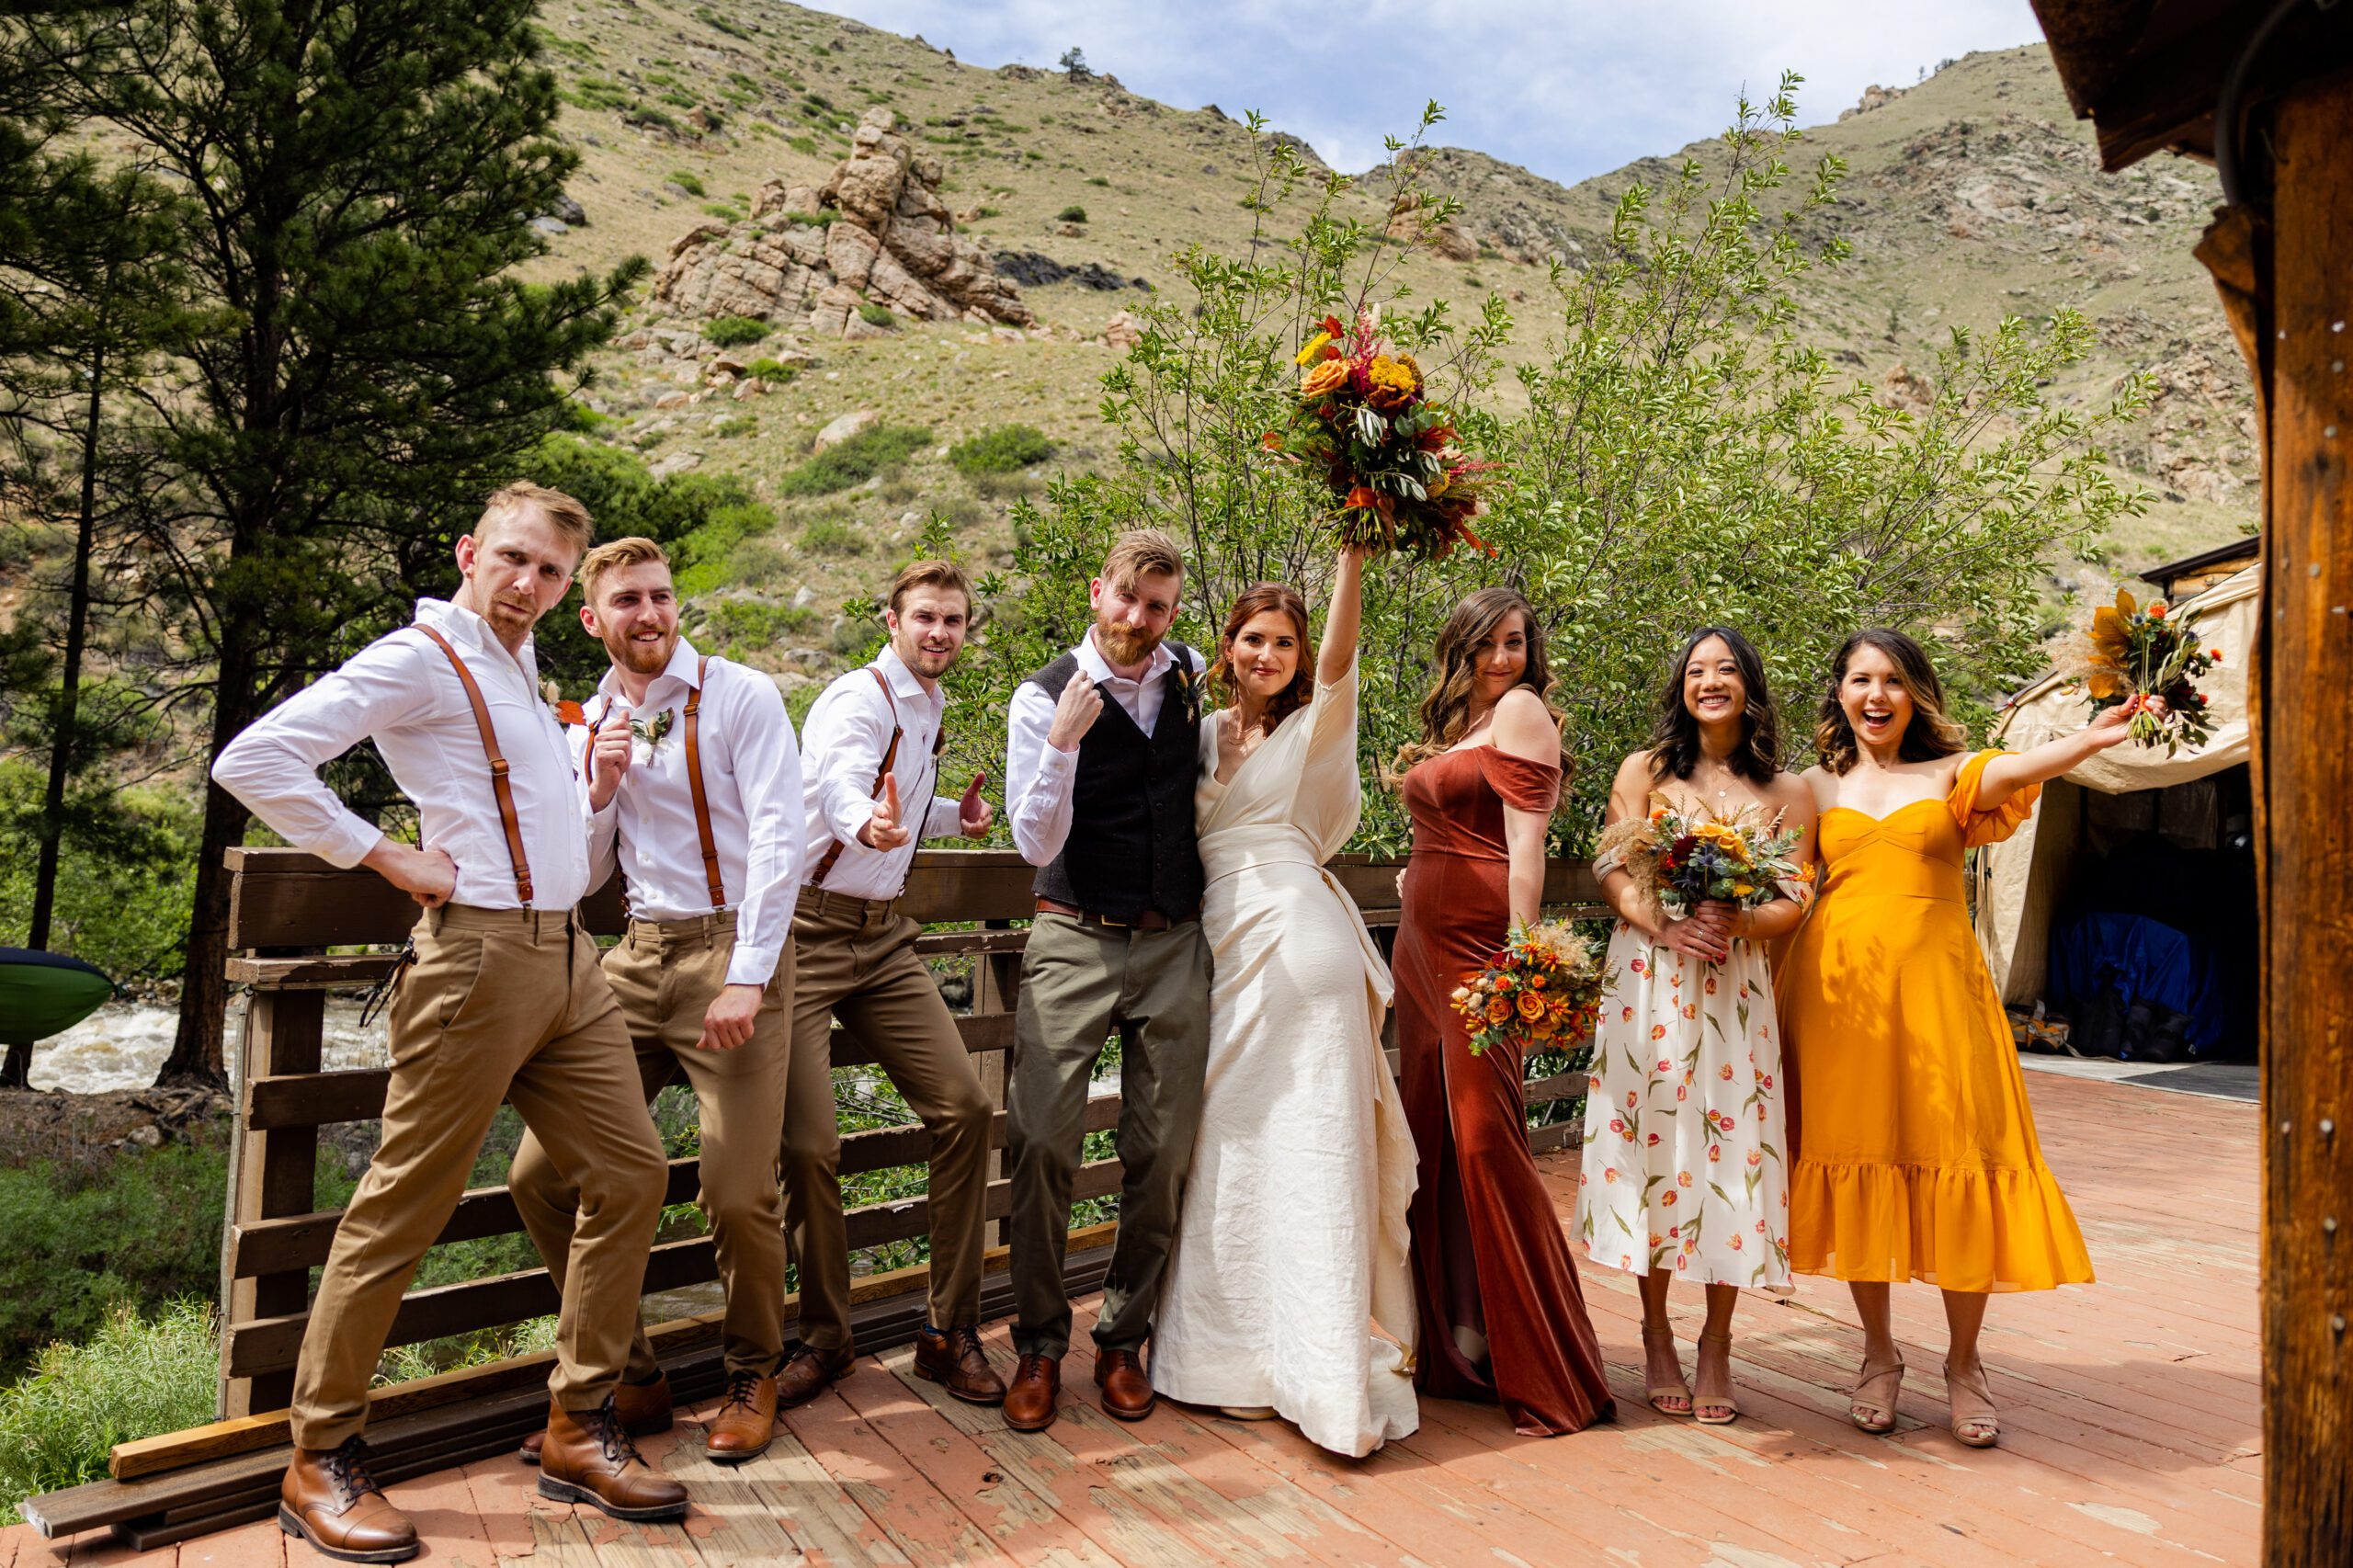 Bridal party photos, Wedding attendant photos, Bridesmaids dresses, groosmen outfits, Wedding photography inspiration